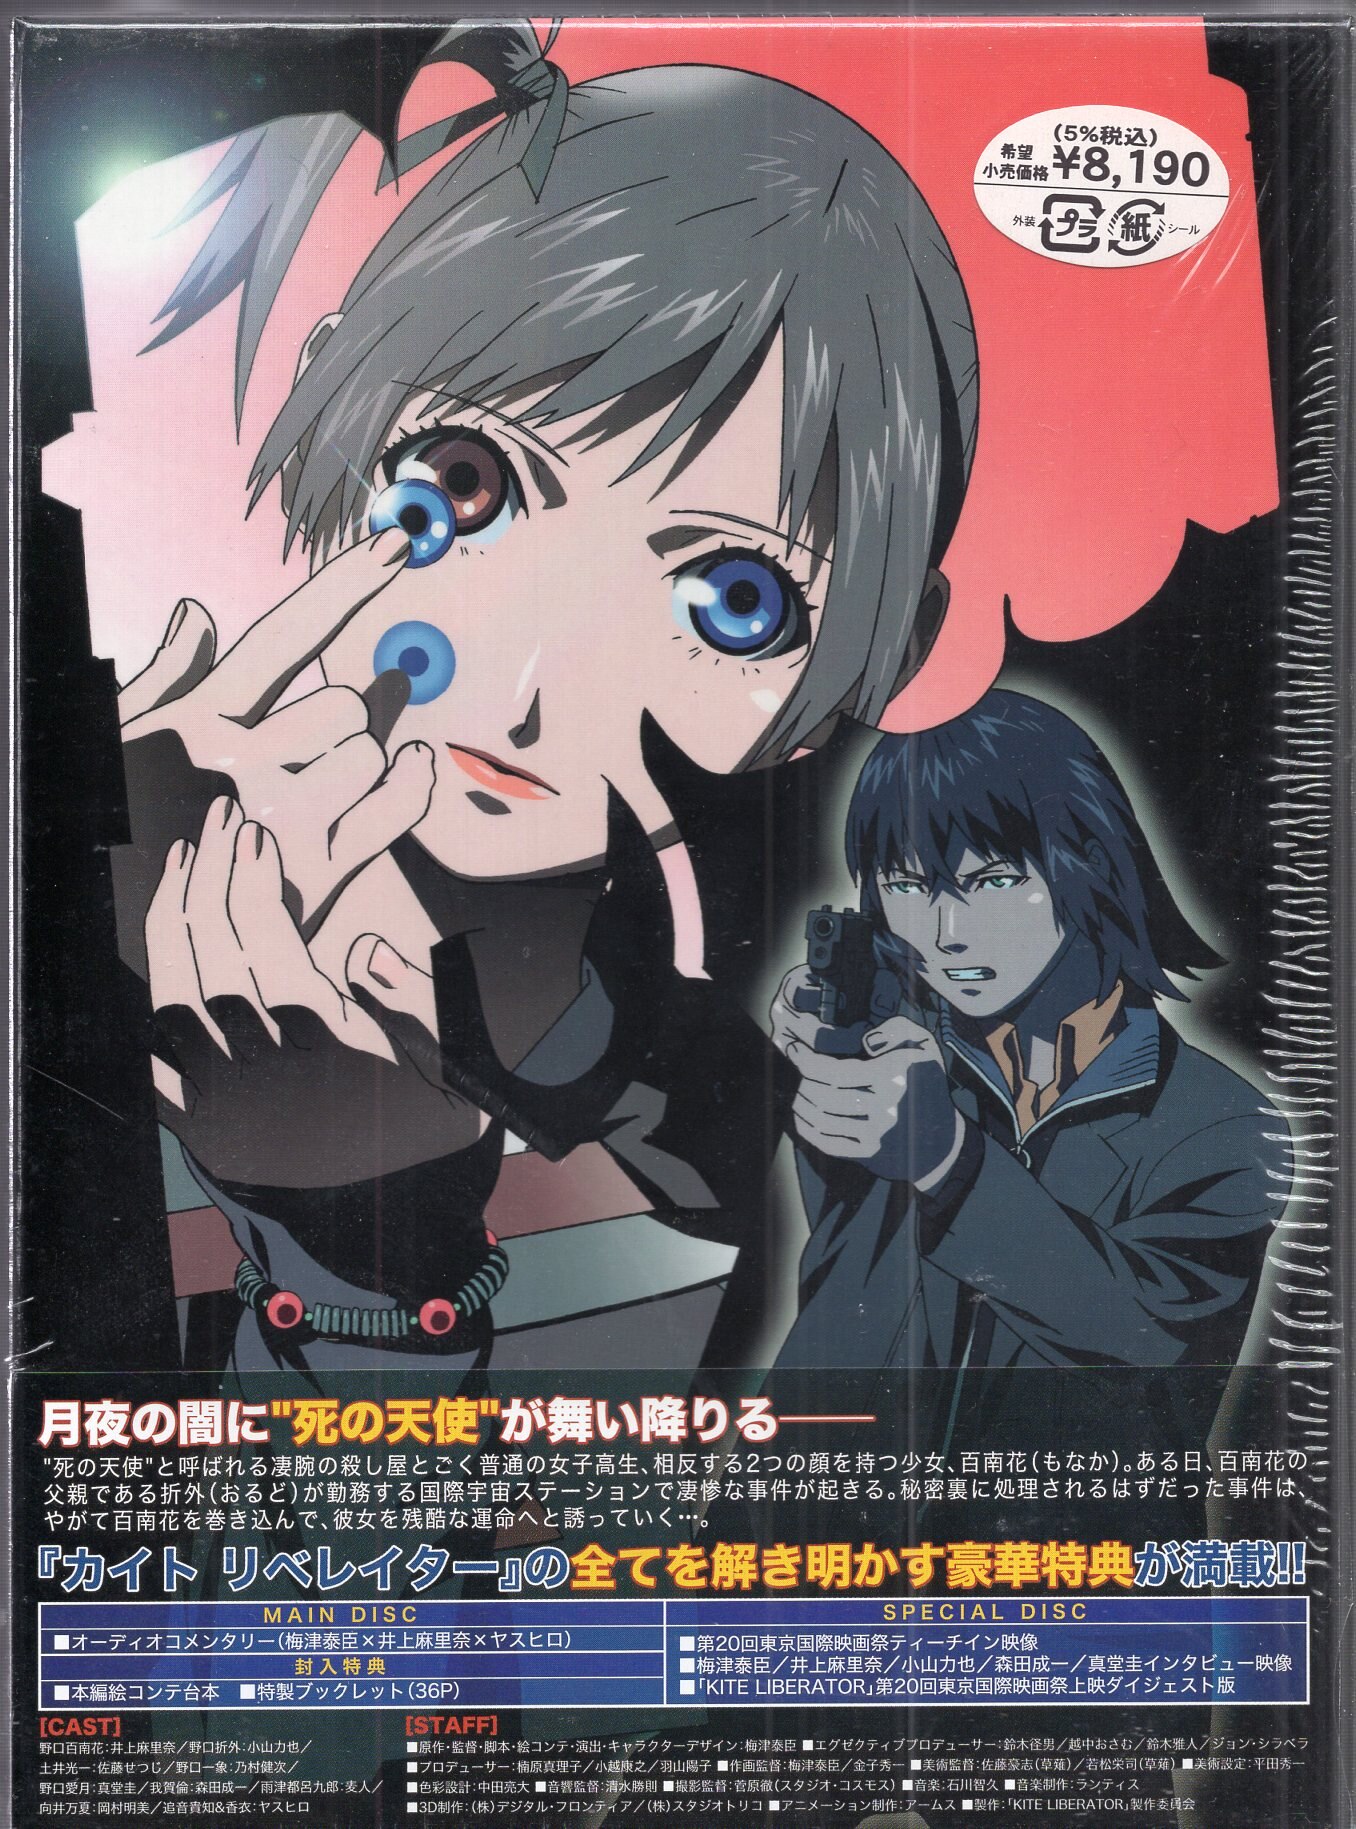 Anime DVD limited edition) KITE LIBERATOR | Mandarake Online Shop